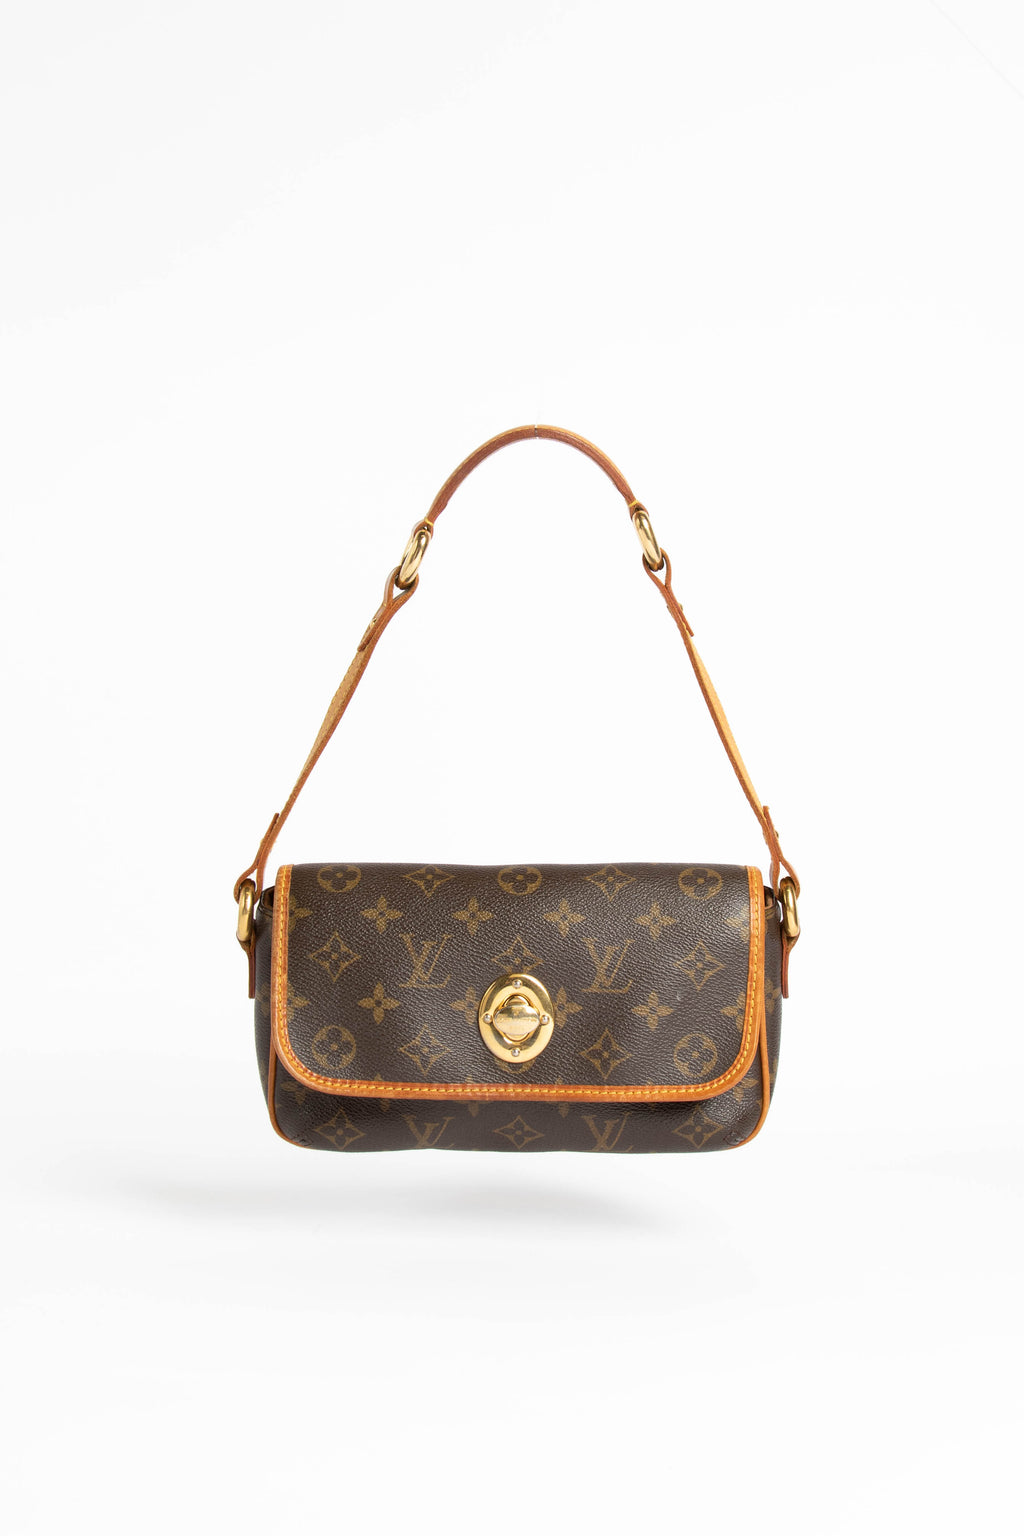 Louis Vuitton Handbags Archives - Handbagholic